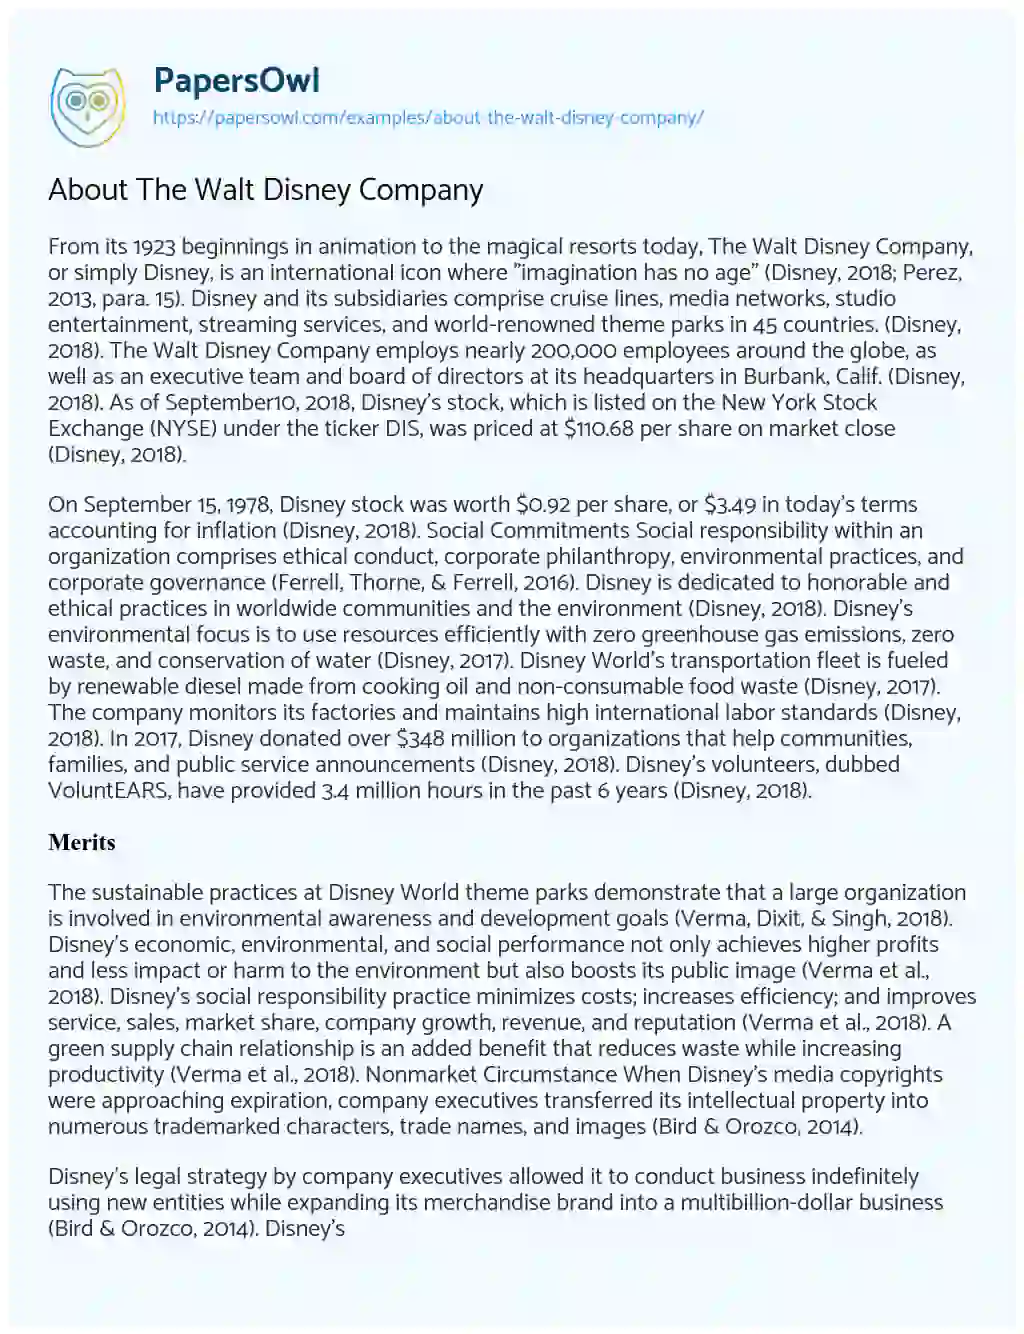 About the Walt Disney Company essay